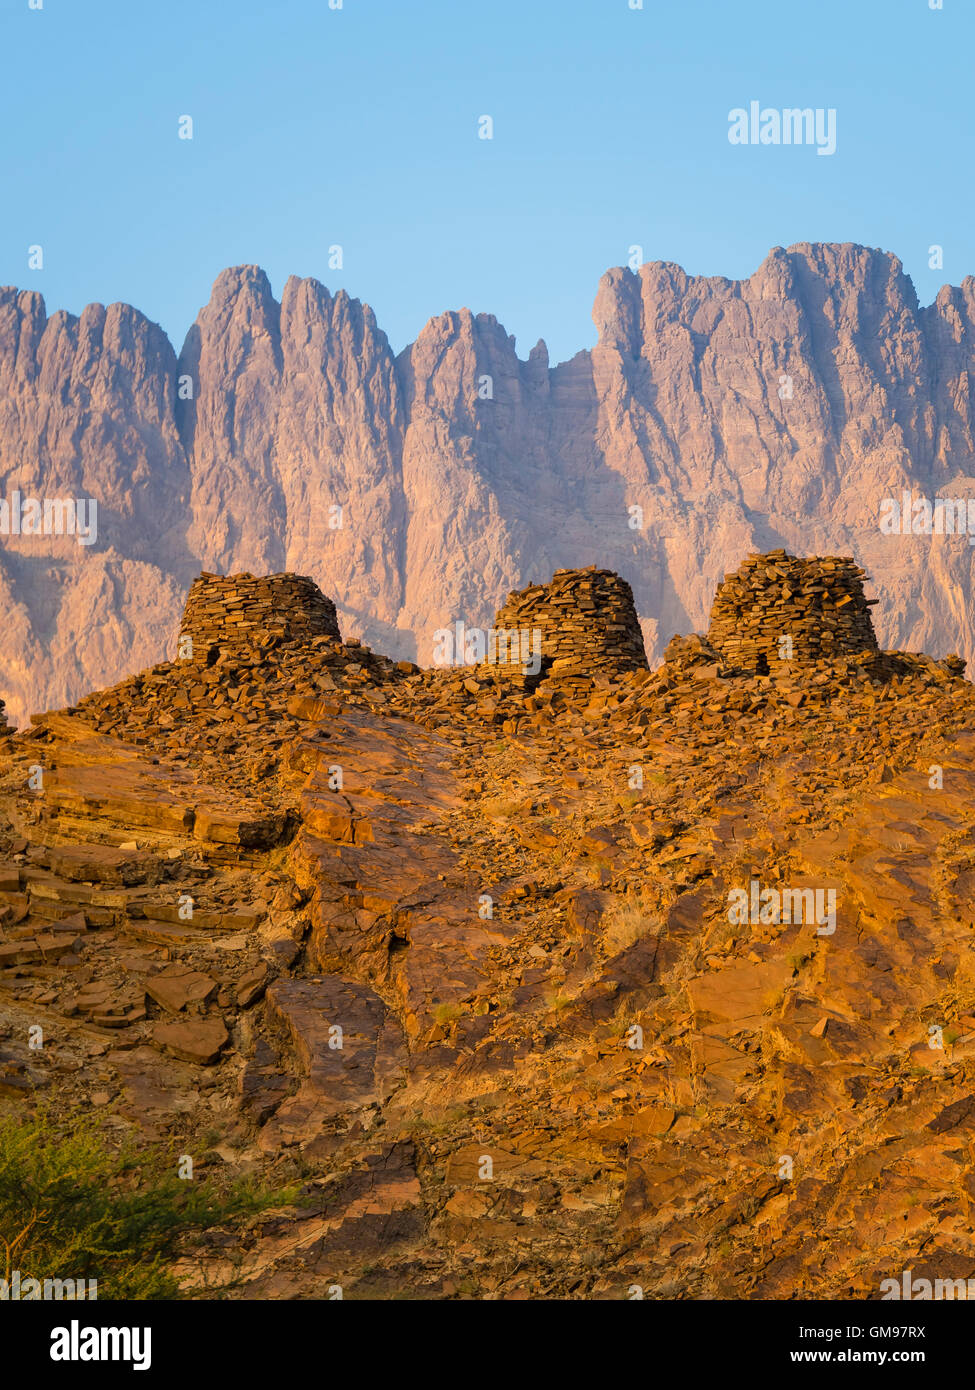 Oman, Ad-Dakhiliyah, Jabal Misht, Al-Ain, beehive tombs, site of an excavation Stock Photo